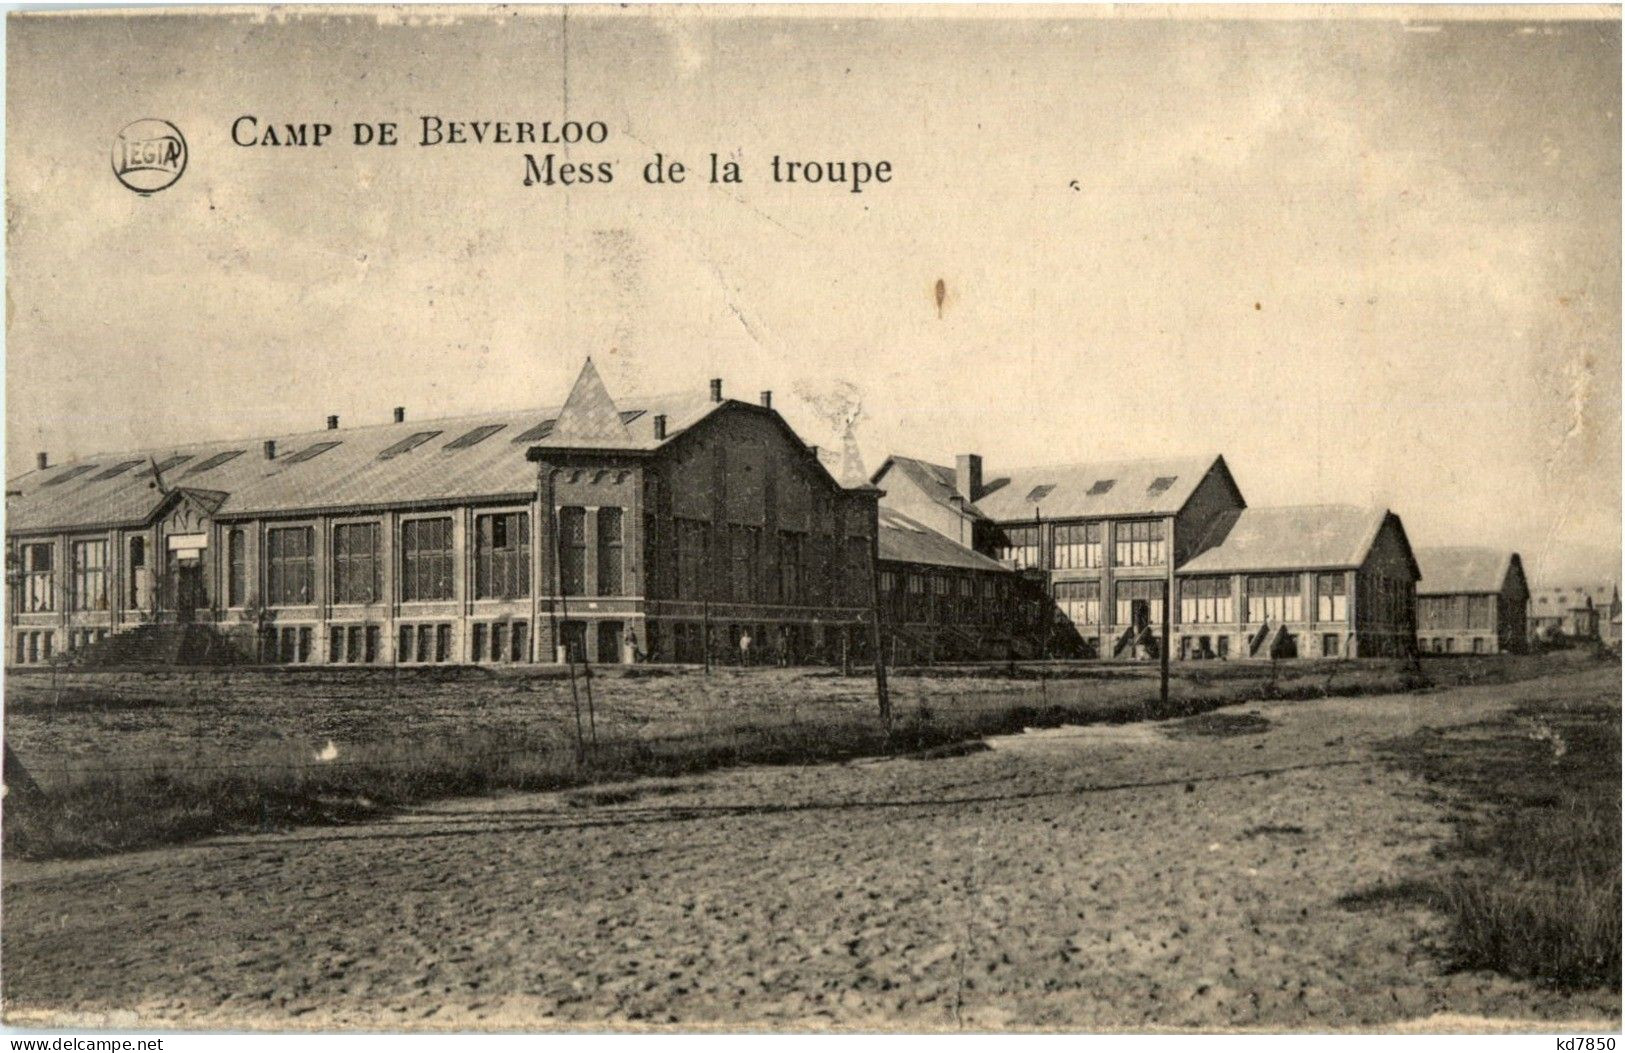 Camp De Berverloo - Mess De La Troupe - Leopoldsburg (Beverloo Camp)